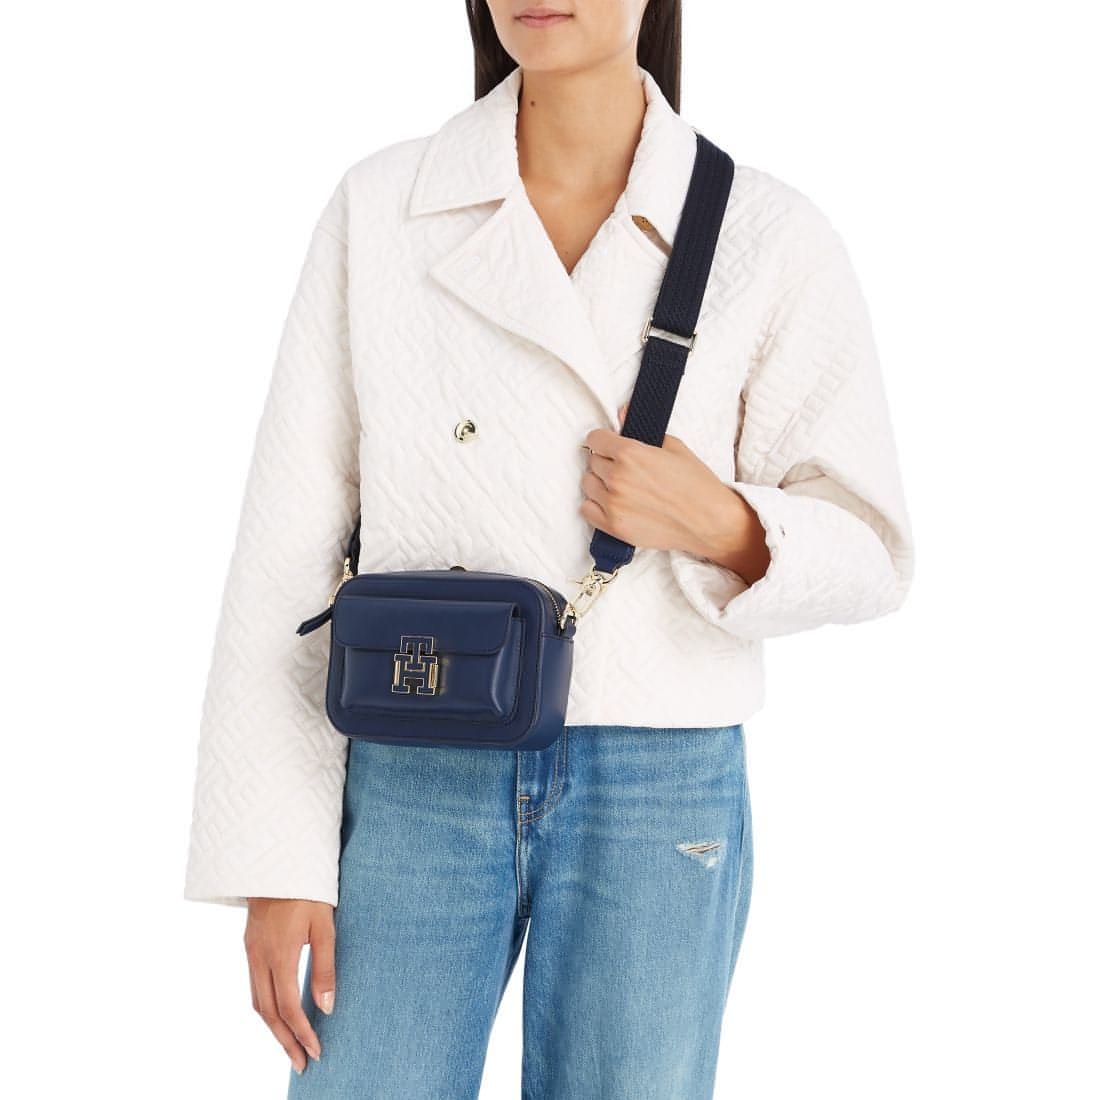 TOMMY HILFIGER moteriška mėlyna rankinė per petį Pushlock camera bag